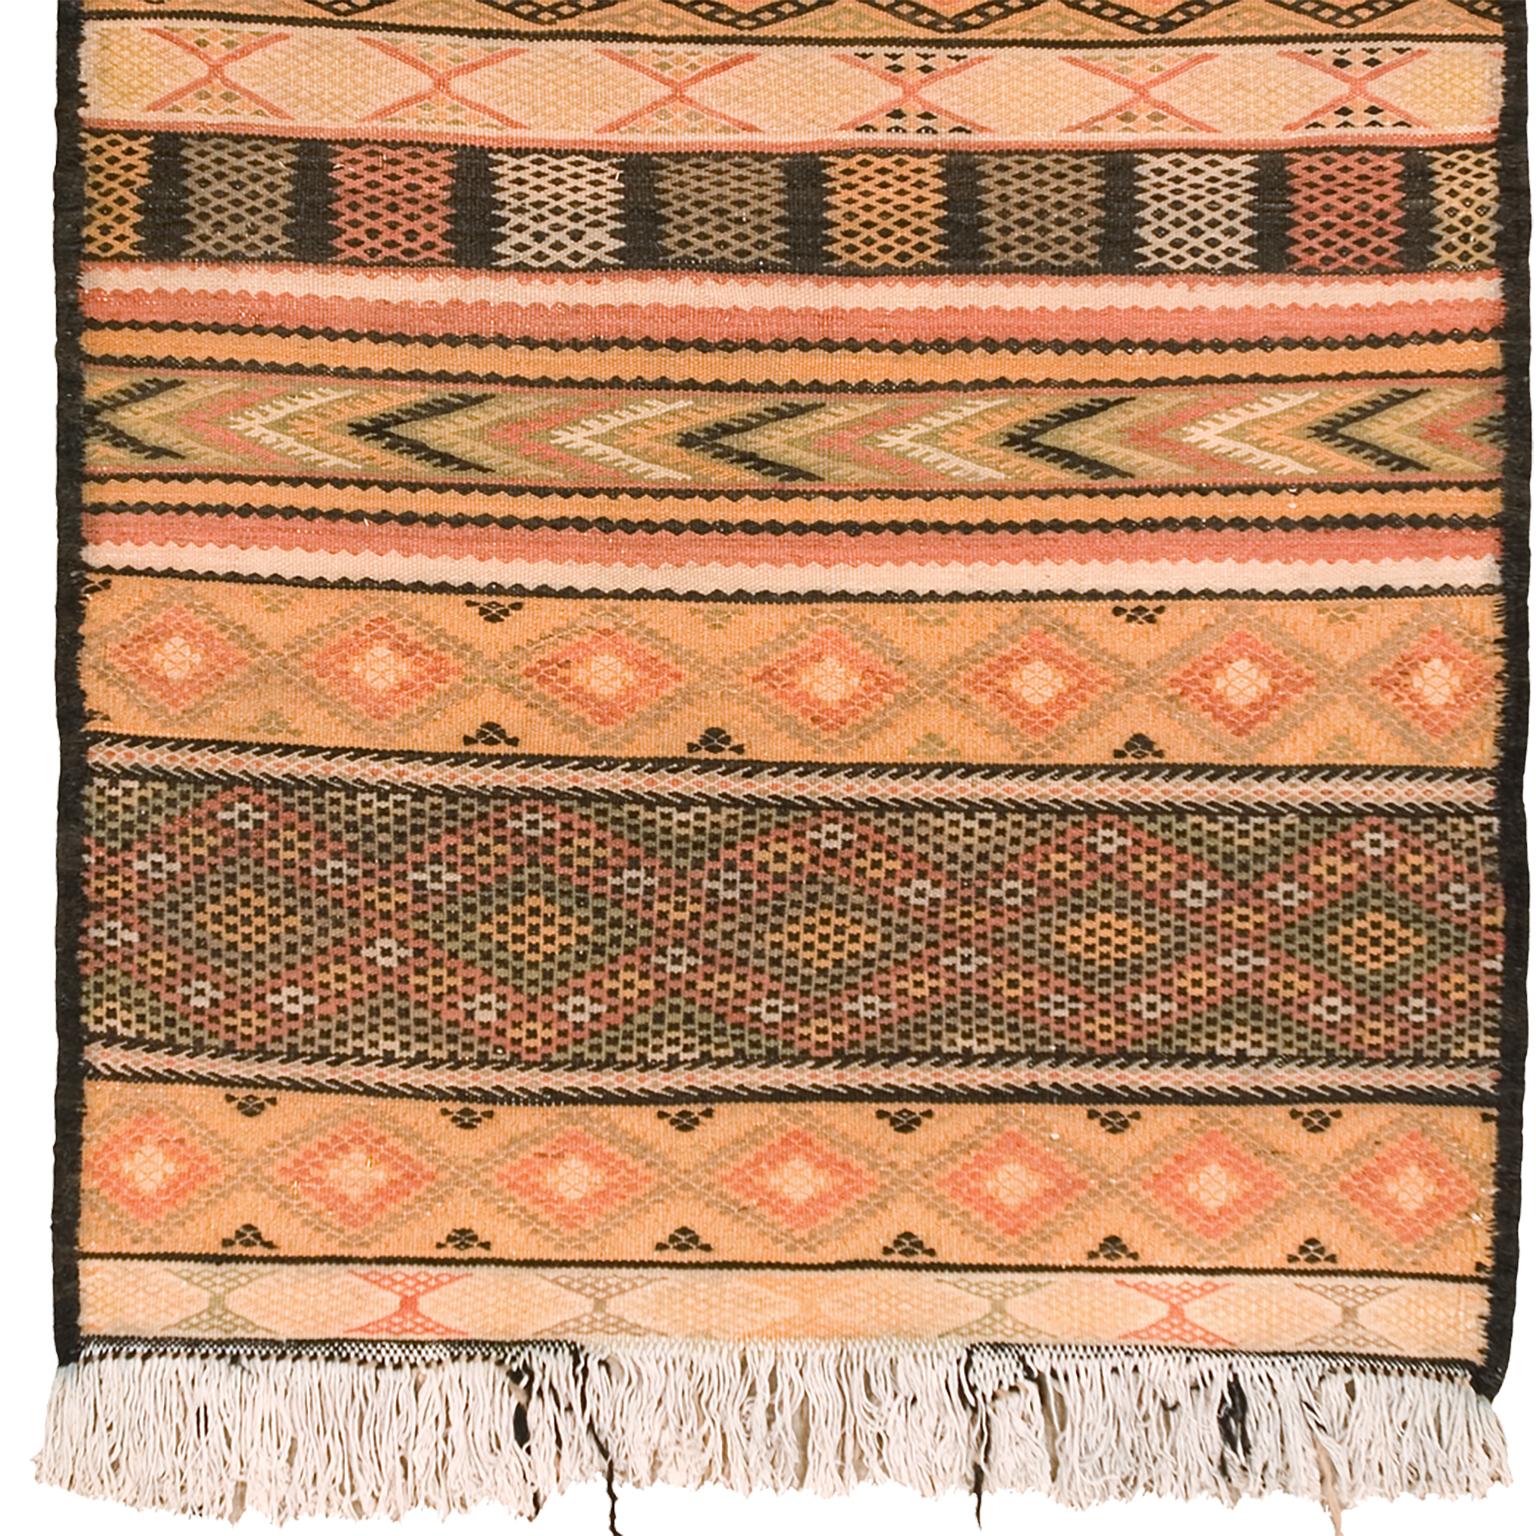 Moroccan handwoven zaiane carpet.
      